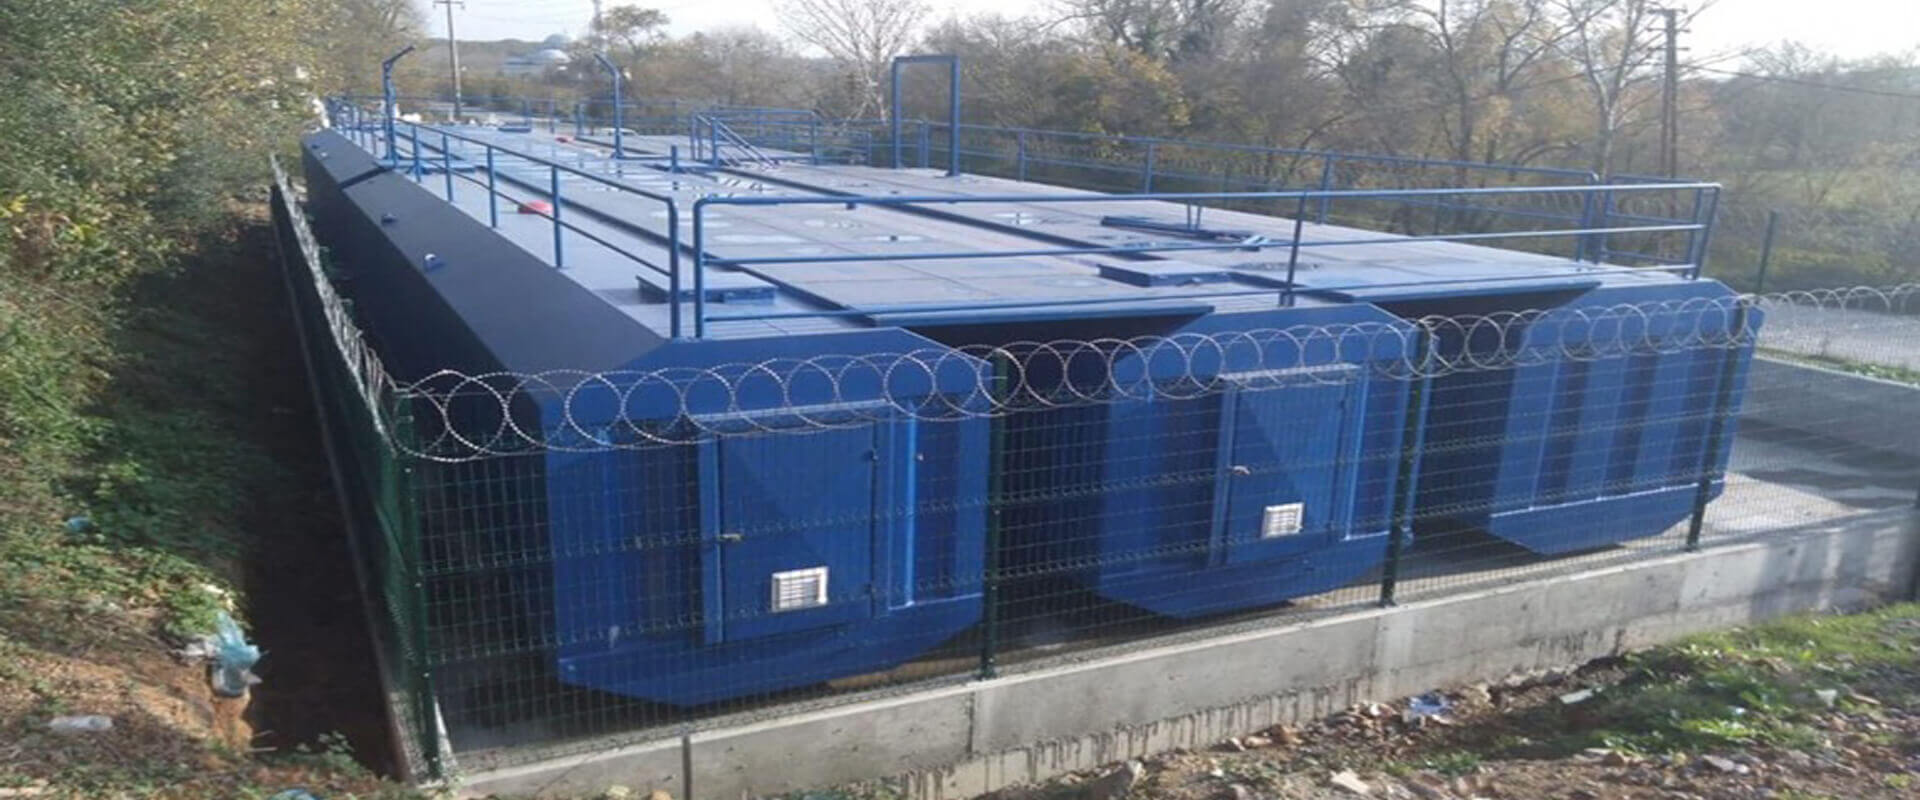 İski - Kuzu Group Package Wastewater Treatment Plant